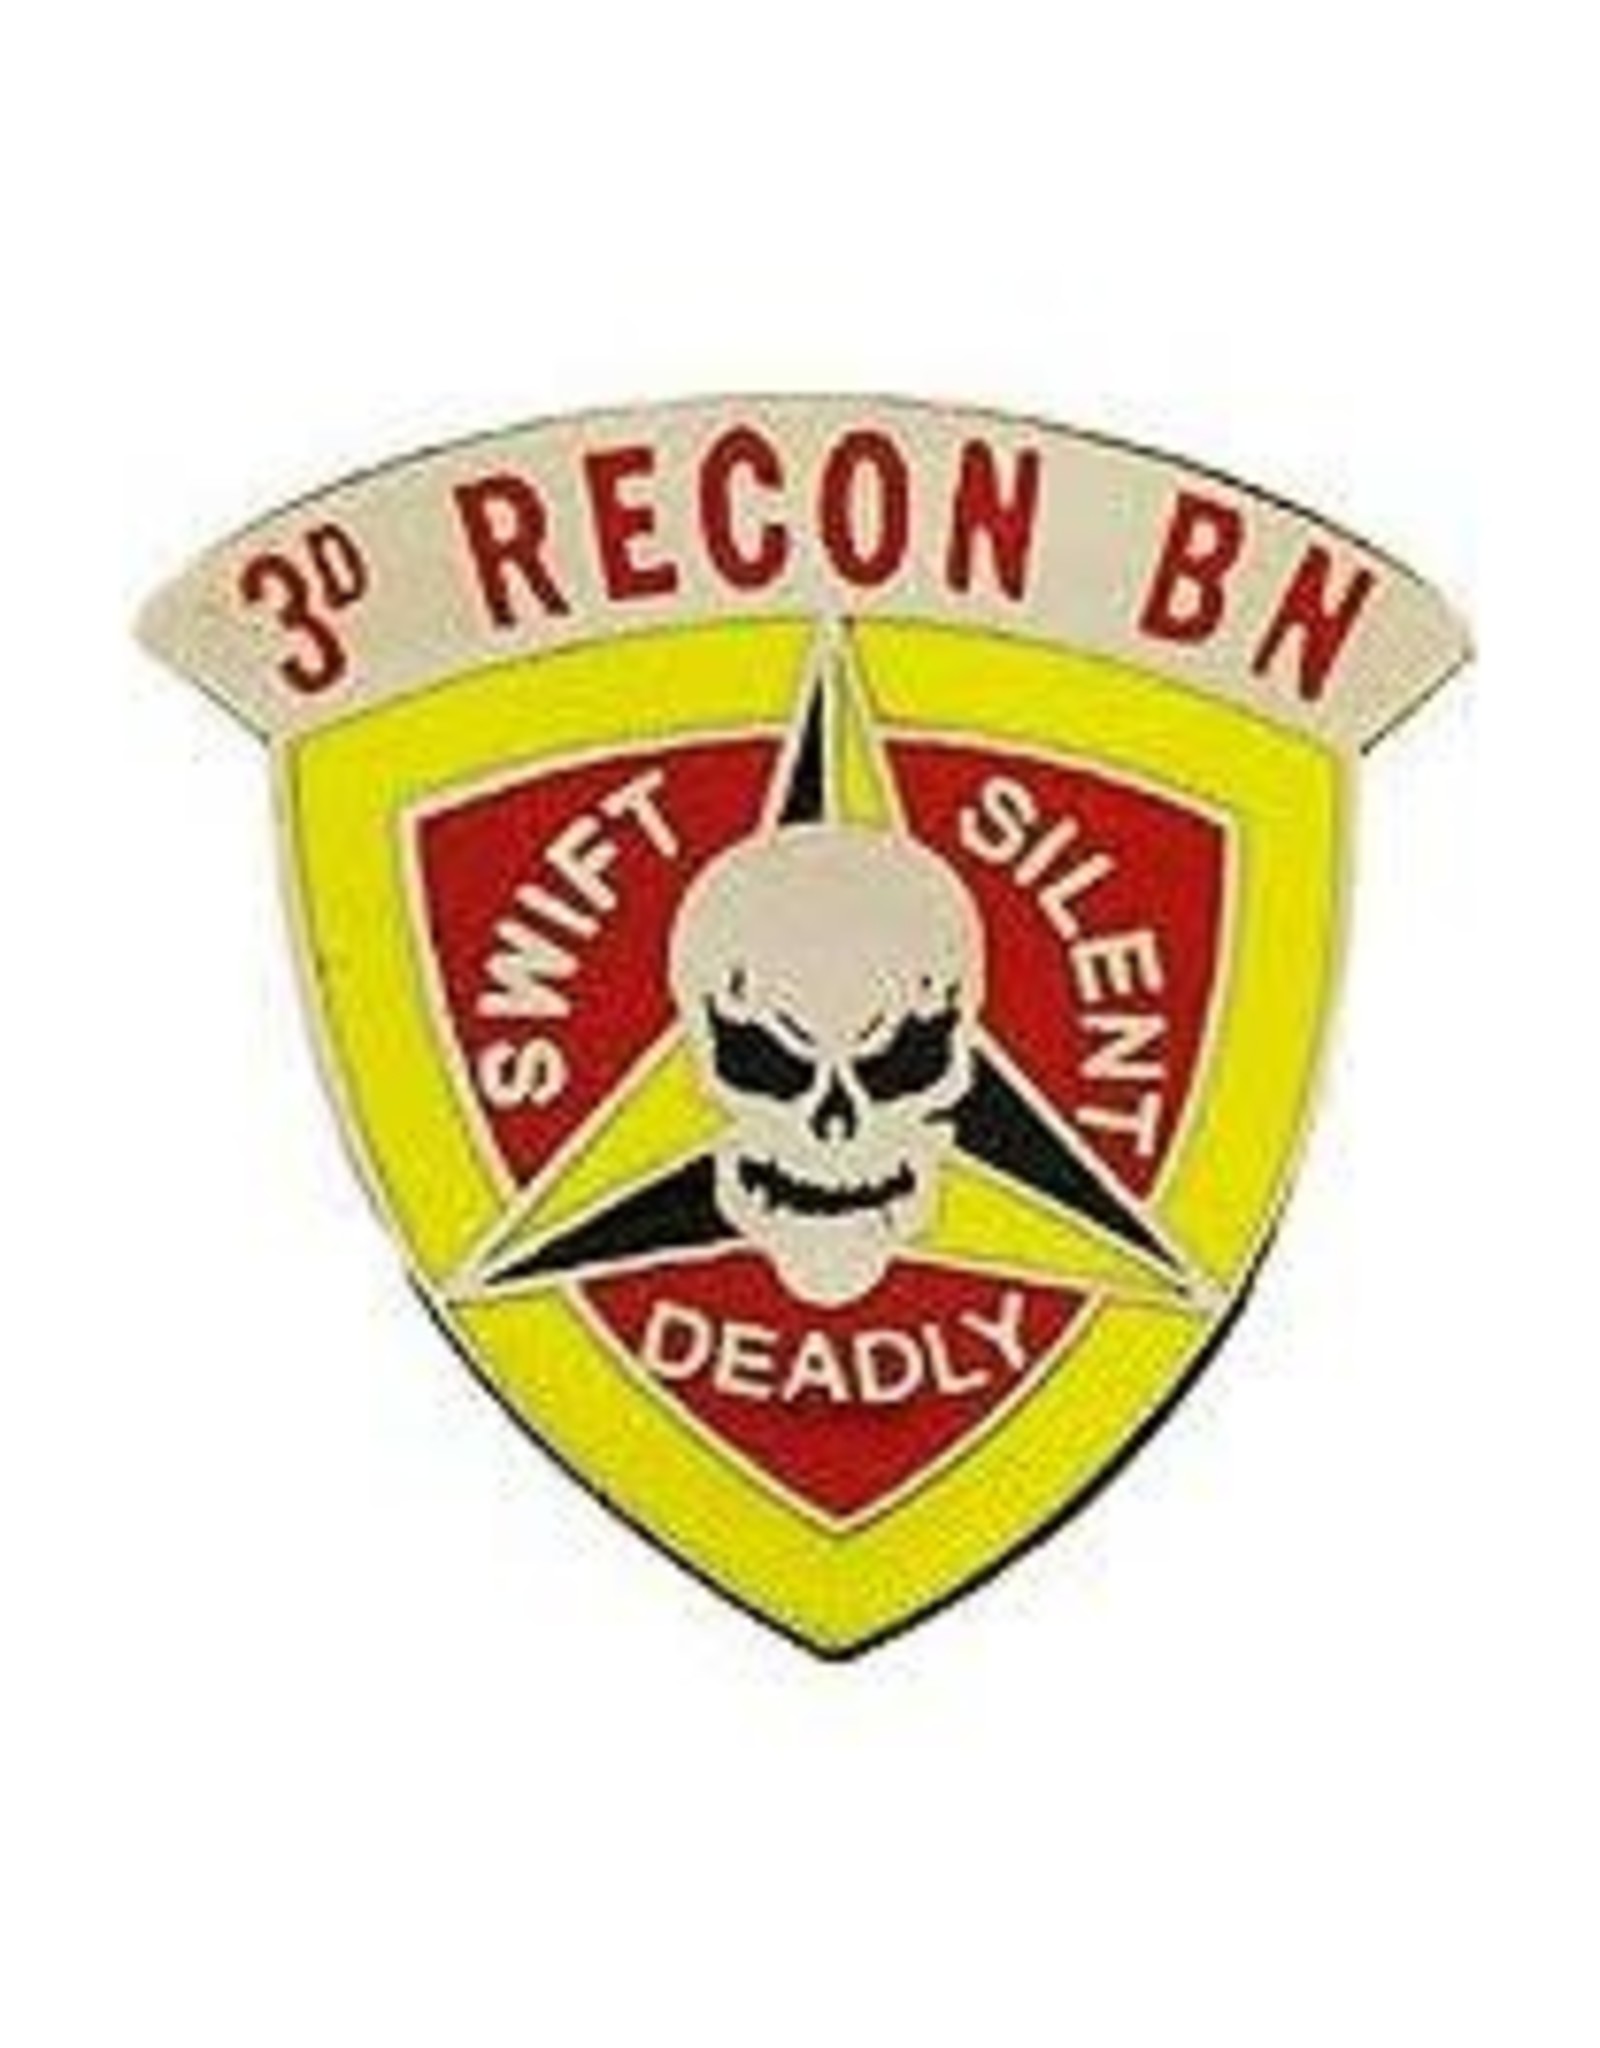 Pin - USMC 003rd Recon Bn w/ Yellow Border